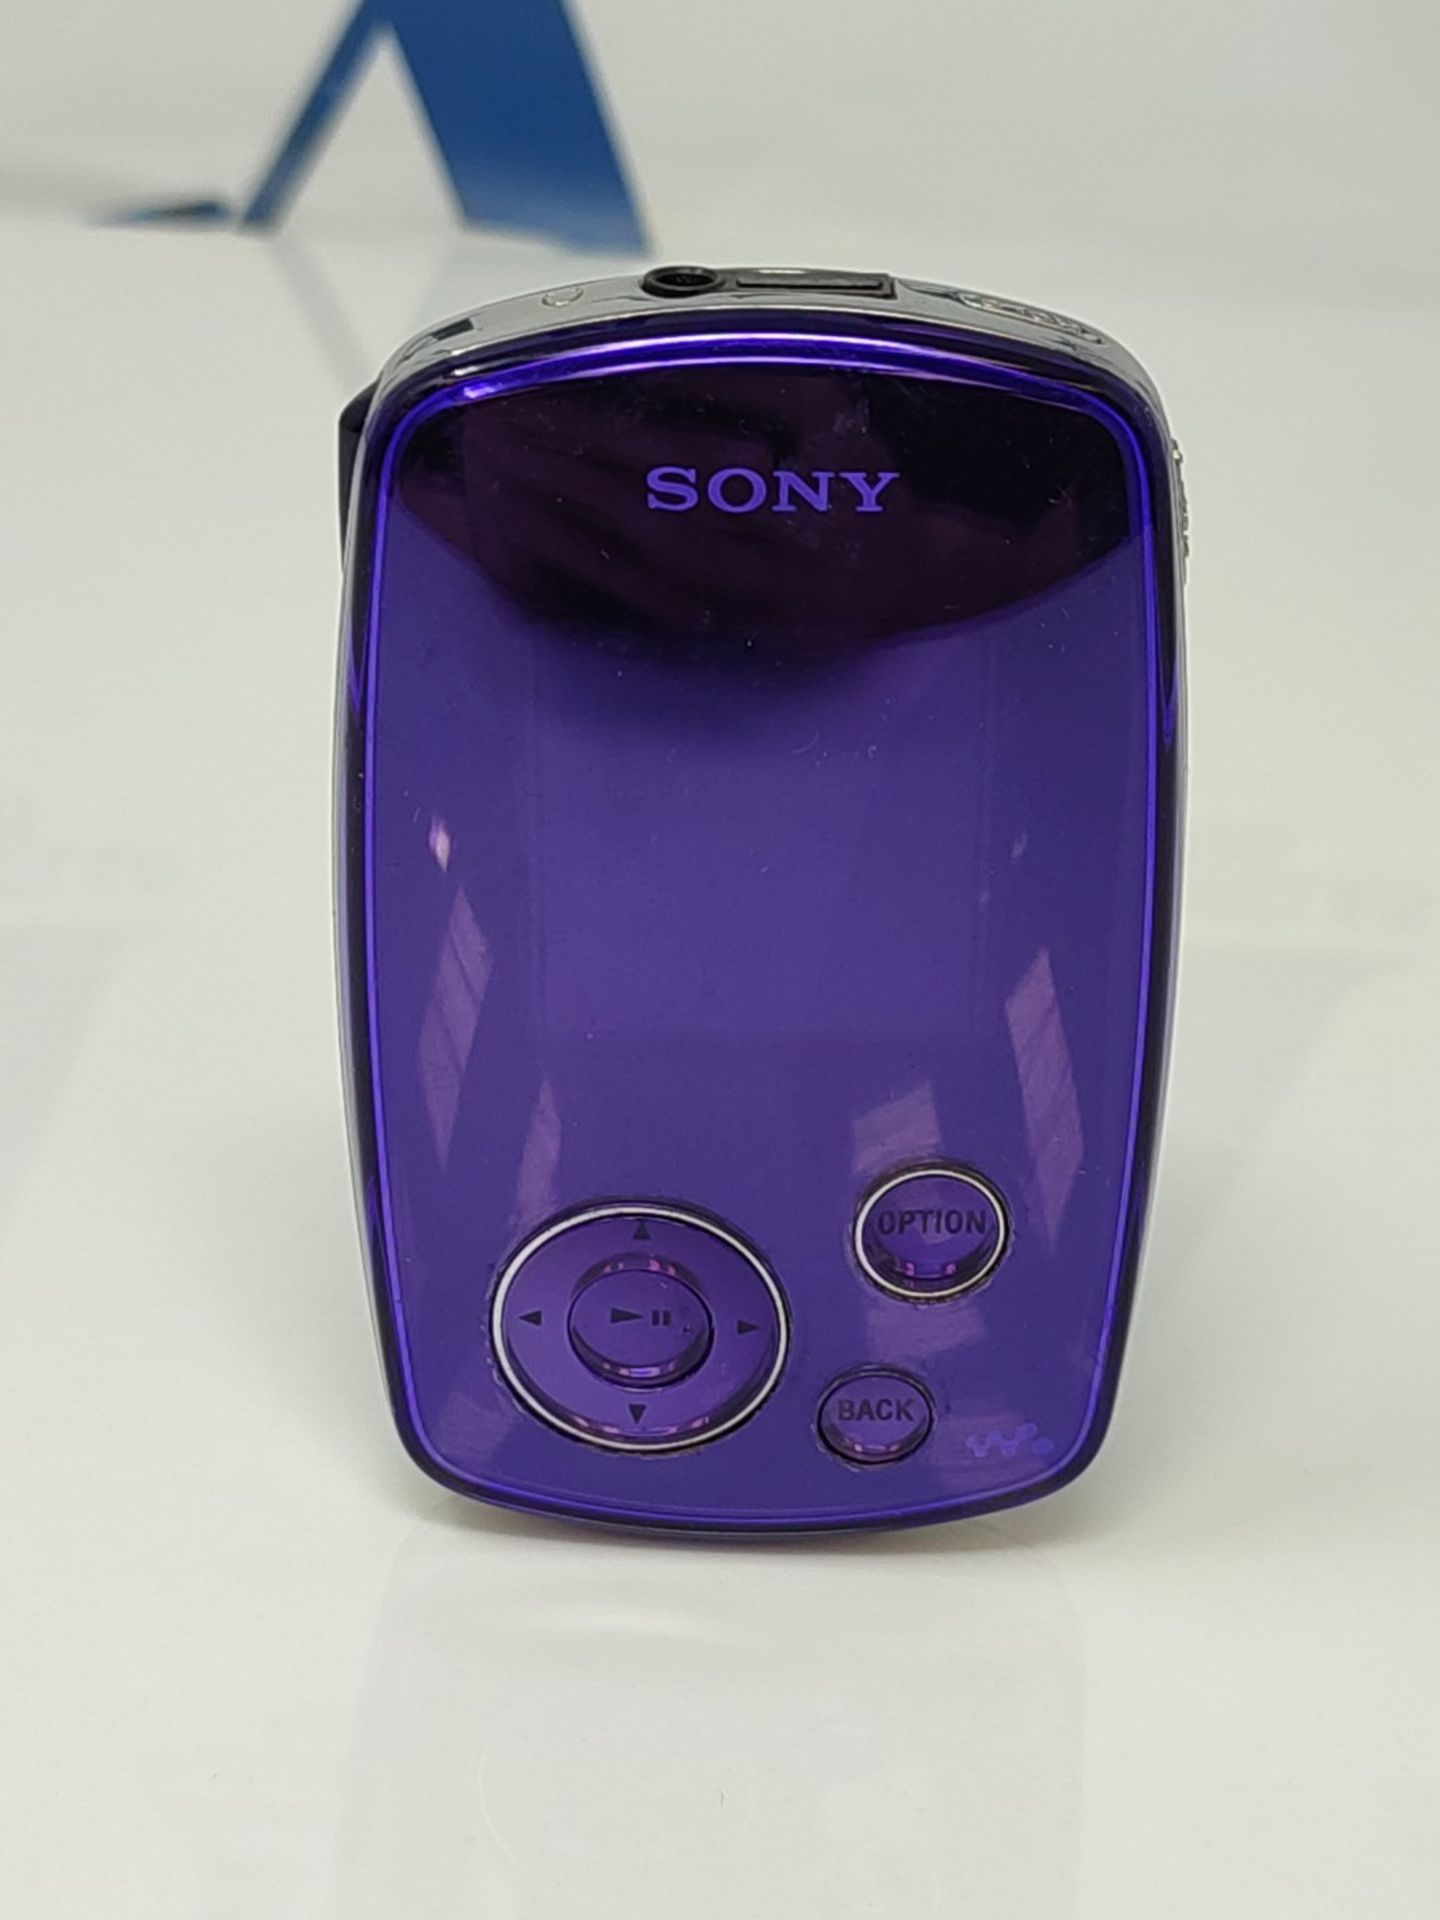 Sony Walkman NW-A1000 (6GB) Digital Media Player